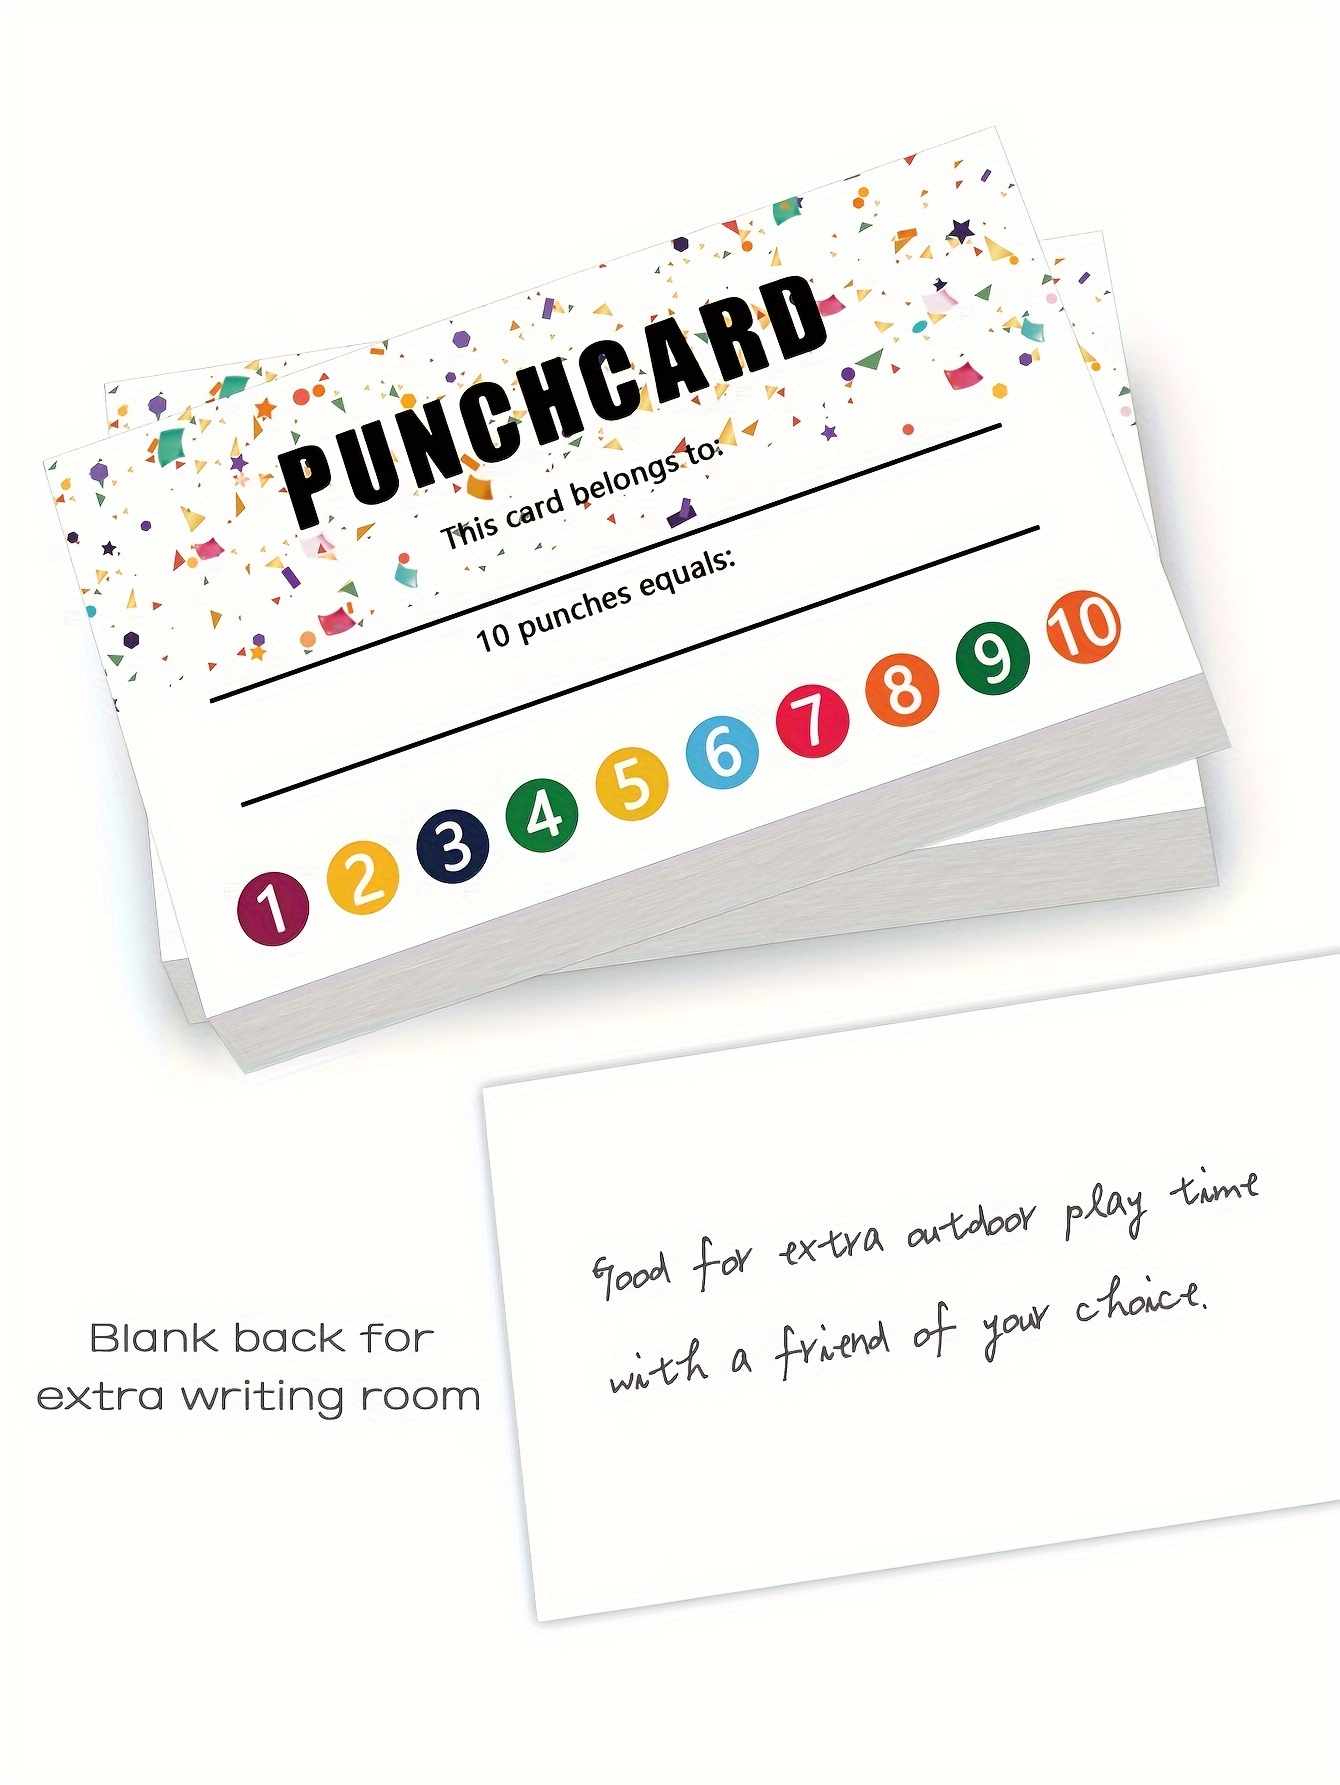 Good Behavior Punch Cards